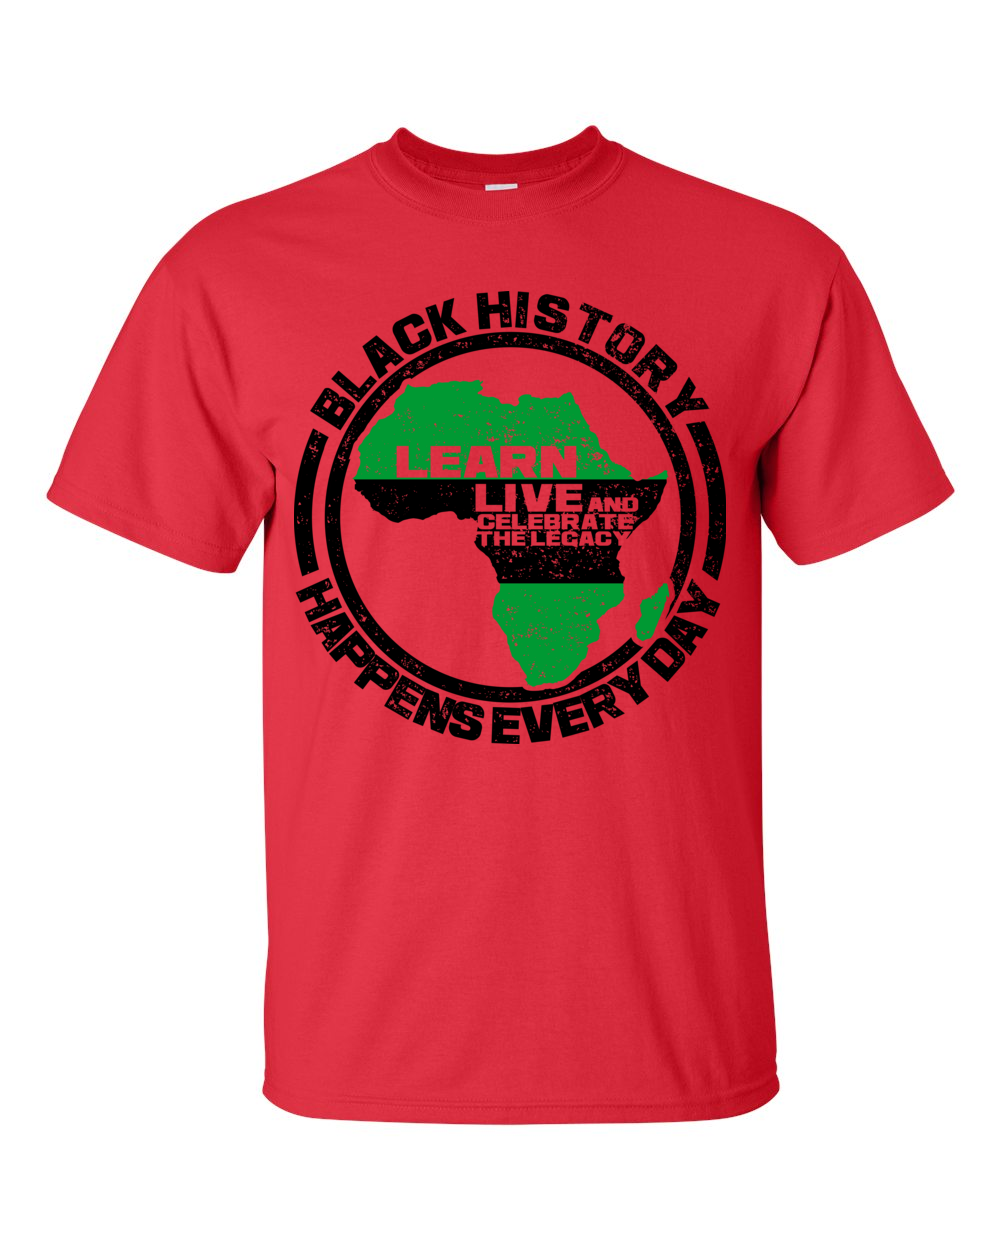 Black History Happens Everyday Short Sleeve Unisex T-Shirt-T-Shirt-RBG Forever-Small-Red-The Black Art Depot